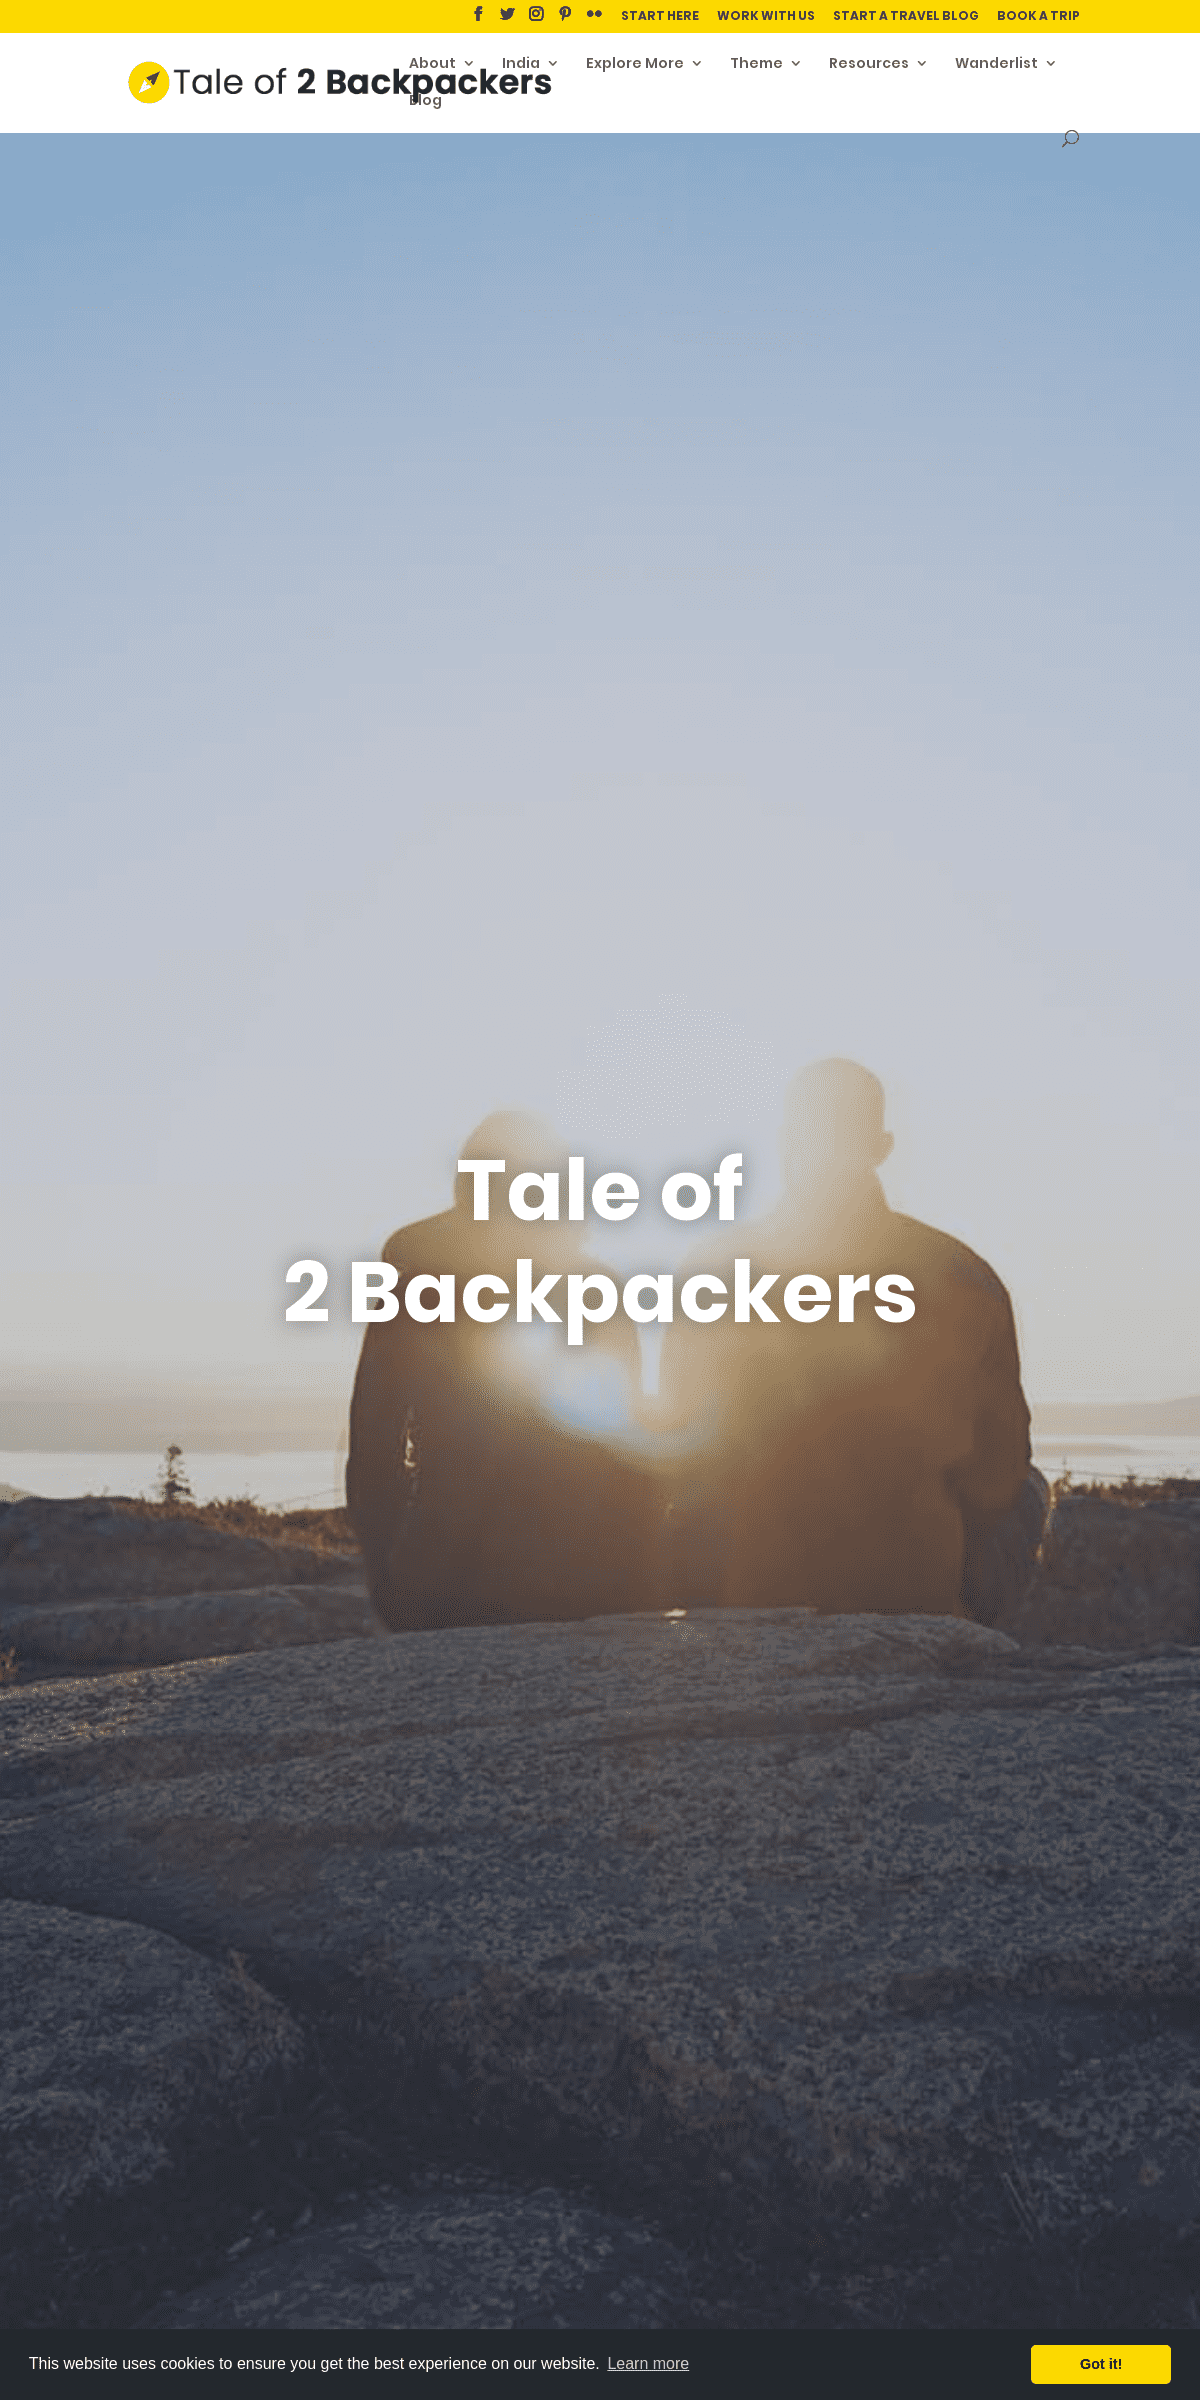 A complete backup of taleof2backpackers.com